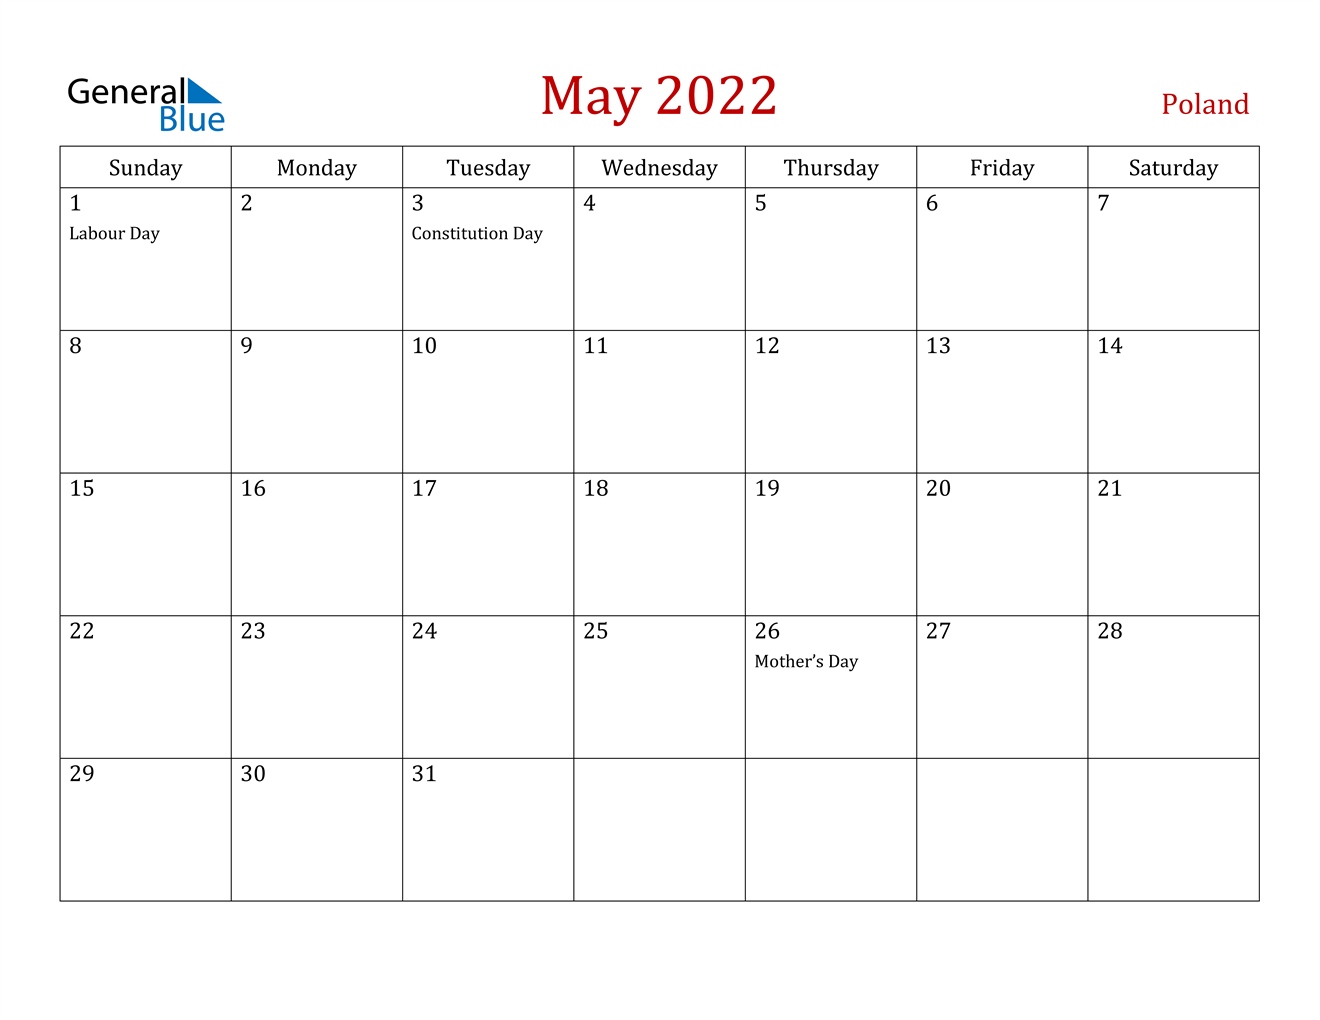 May 2022 Calendar - Poland  Calendar For 2022 May